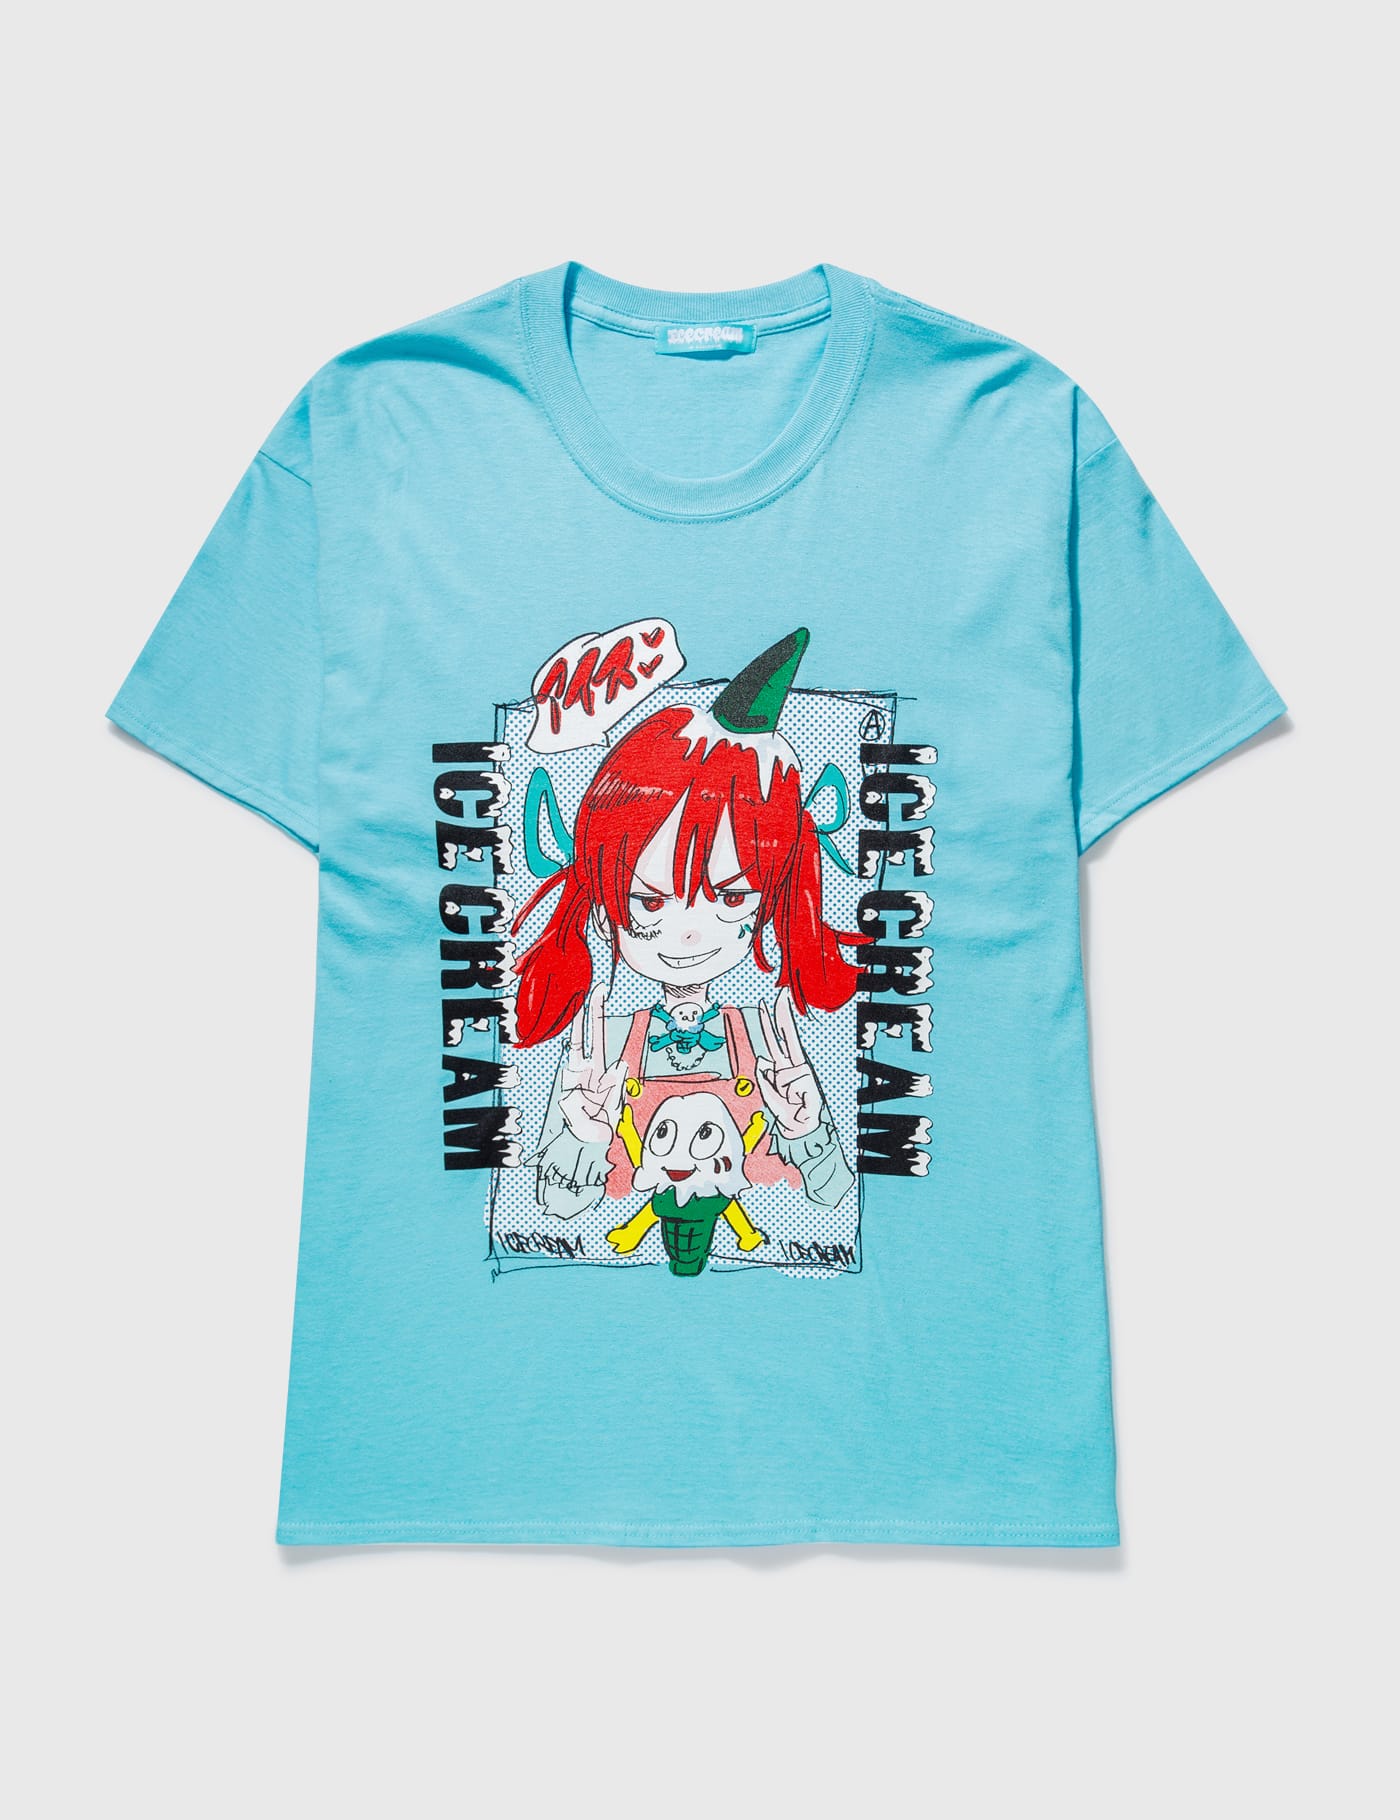 Icecream - Icecream X Jun Inagawa Girl T-shirt | HBX - Globally